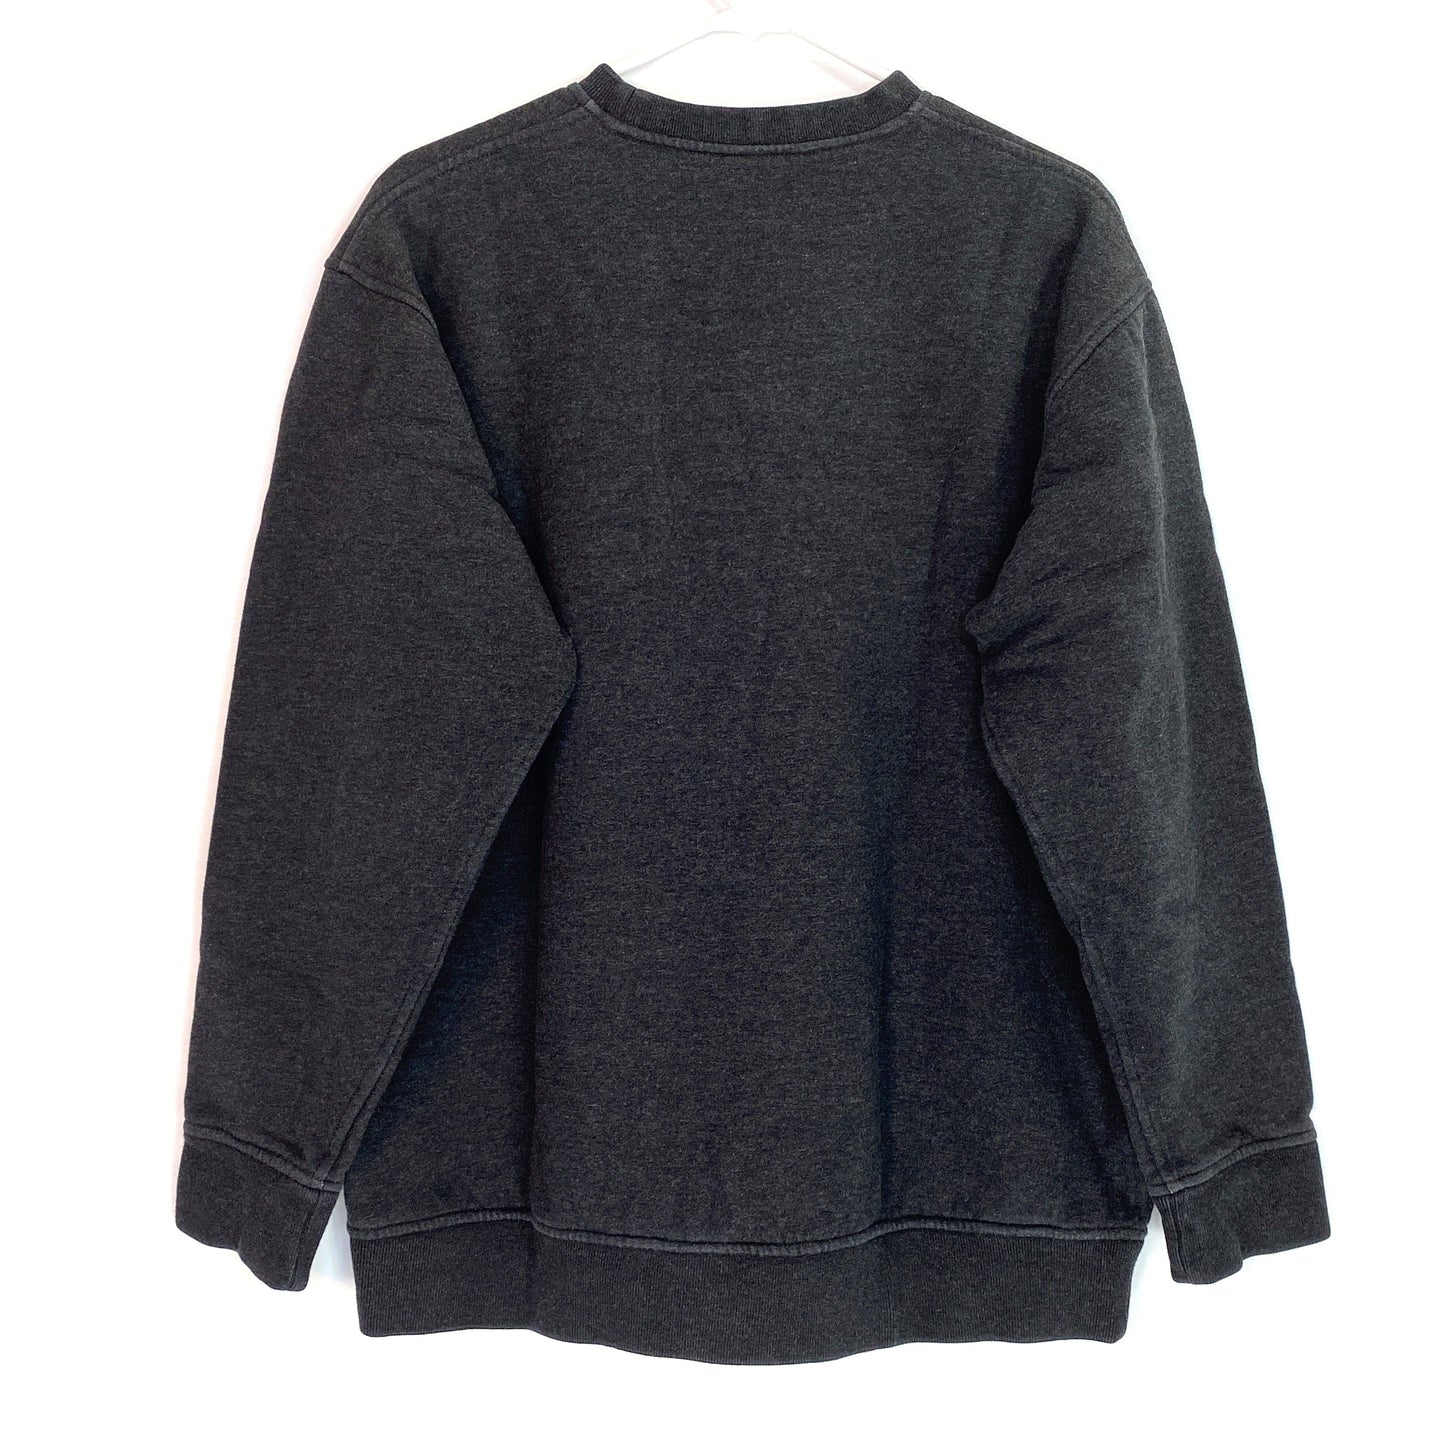 Cozy Sean John Dark Gray Sweatshirt - Mens Size L - Long Sleeve